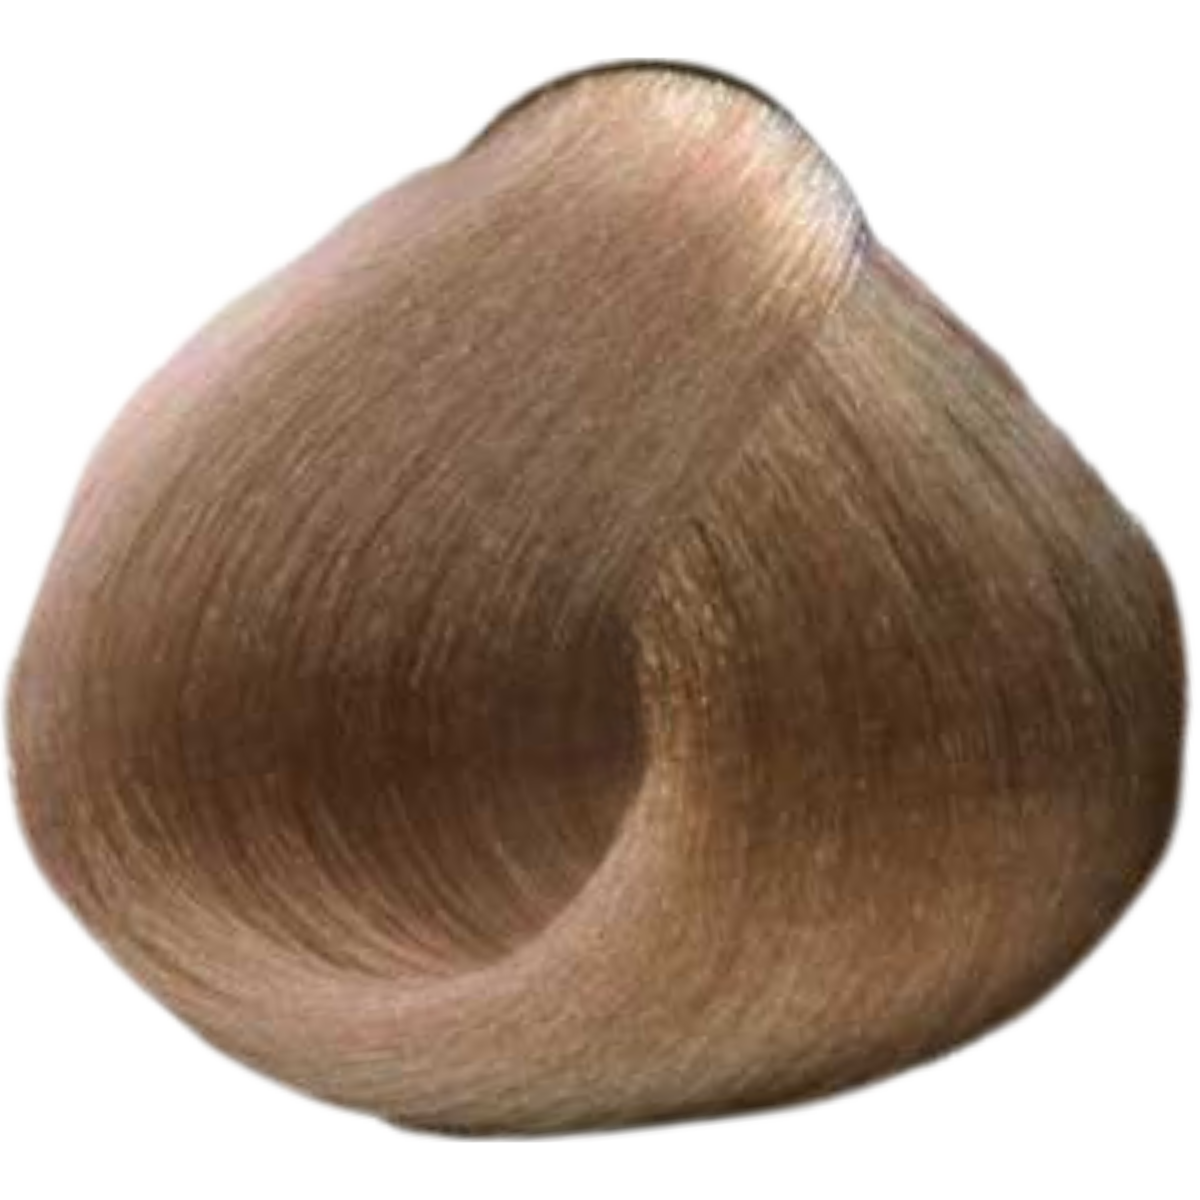 צבע שיער 12.43 SPECIAL BLONDE COPPER GOLDEN פארמויטה FarmaVita צבע לשיער 100 גרם